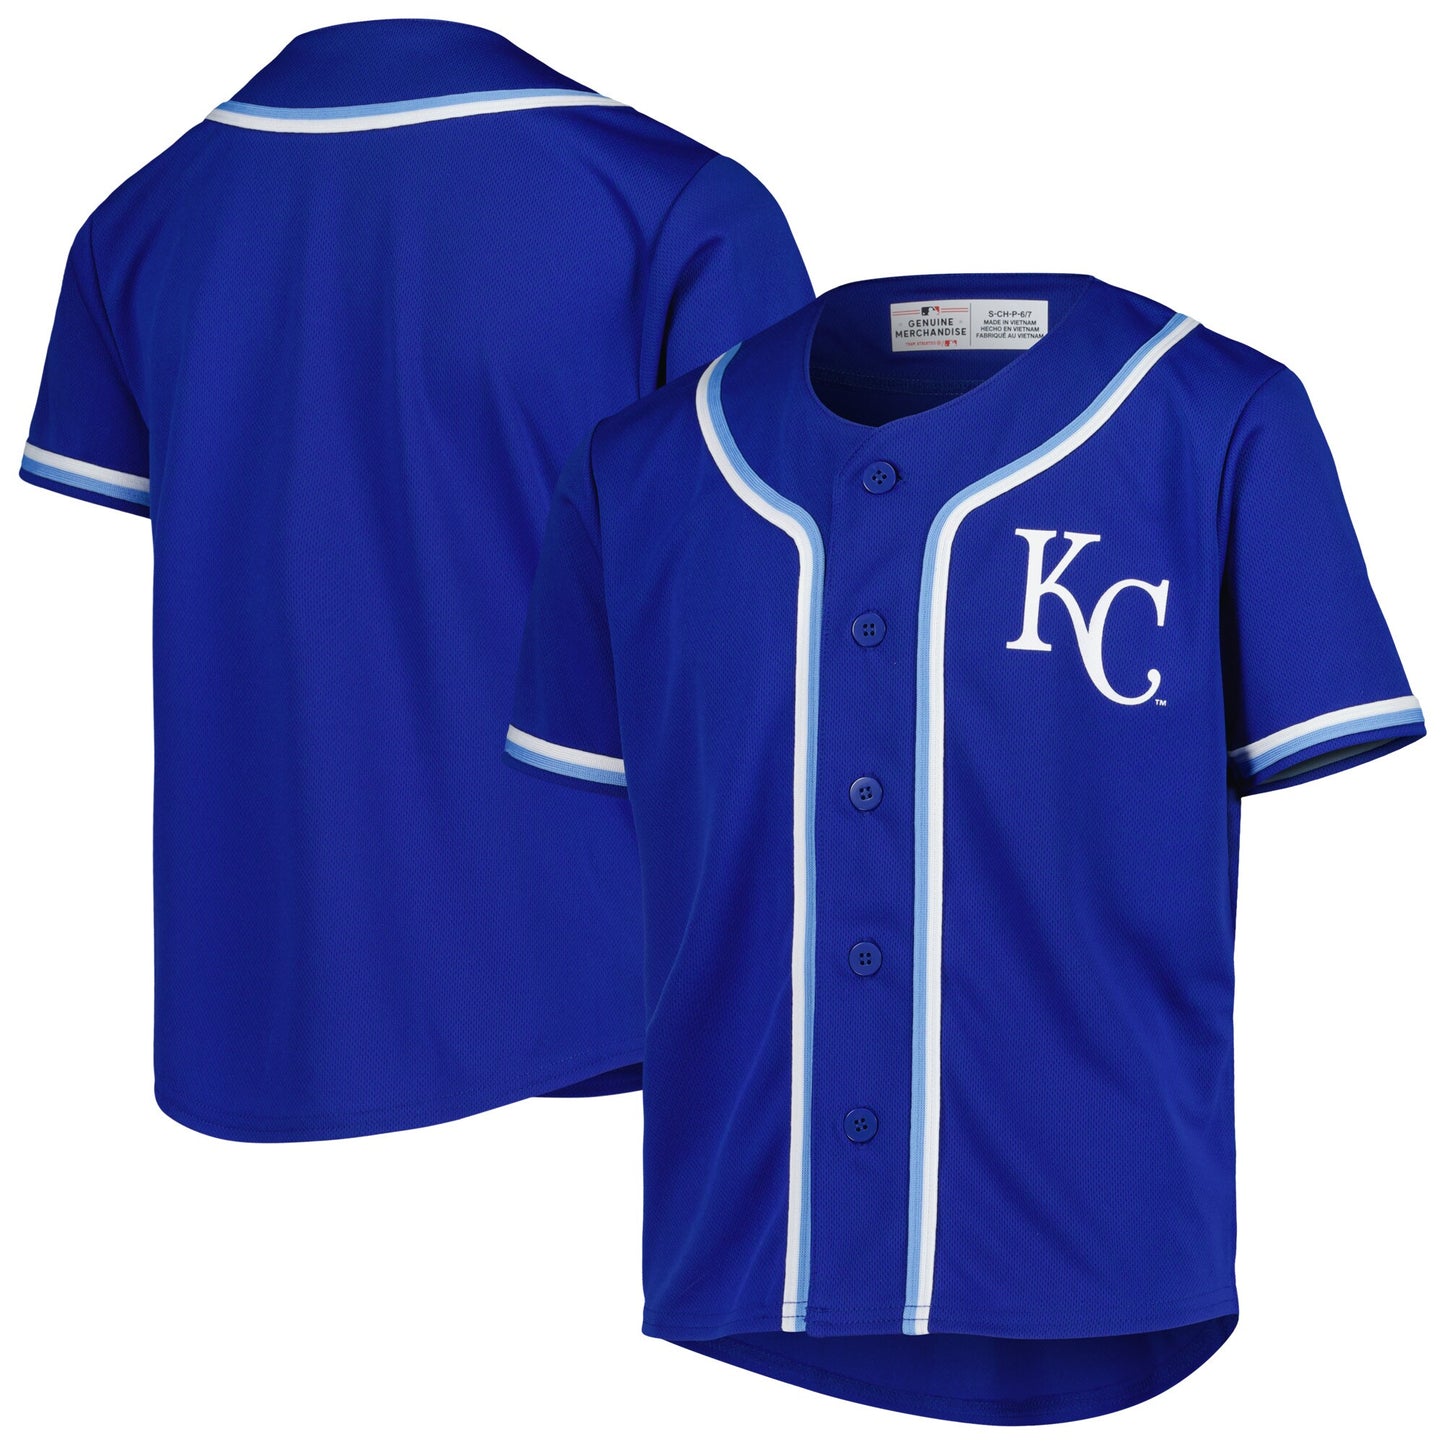 Youth Royal Kansas City Royals Full-Button Replica Jersey